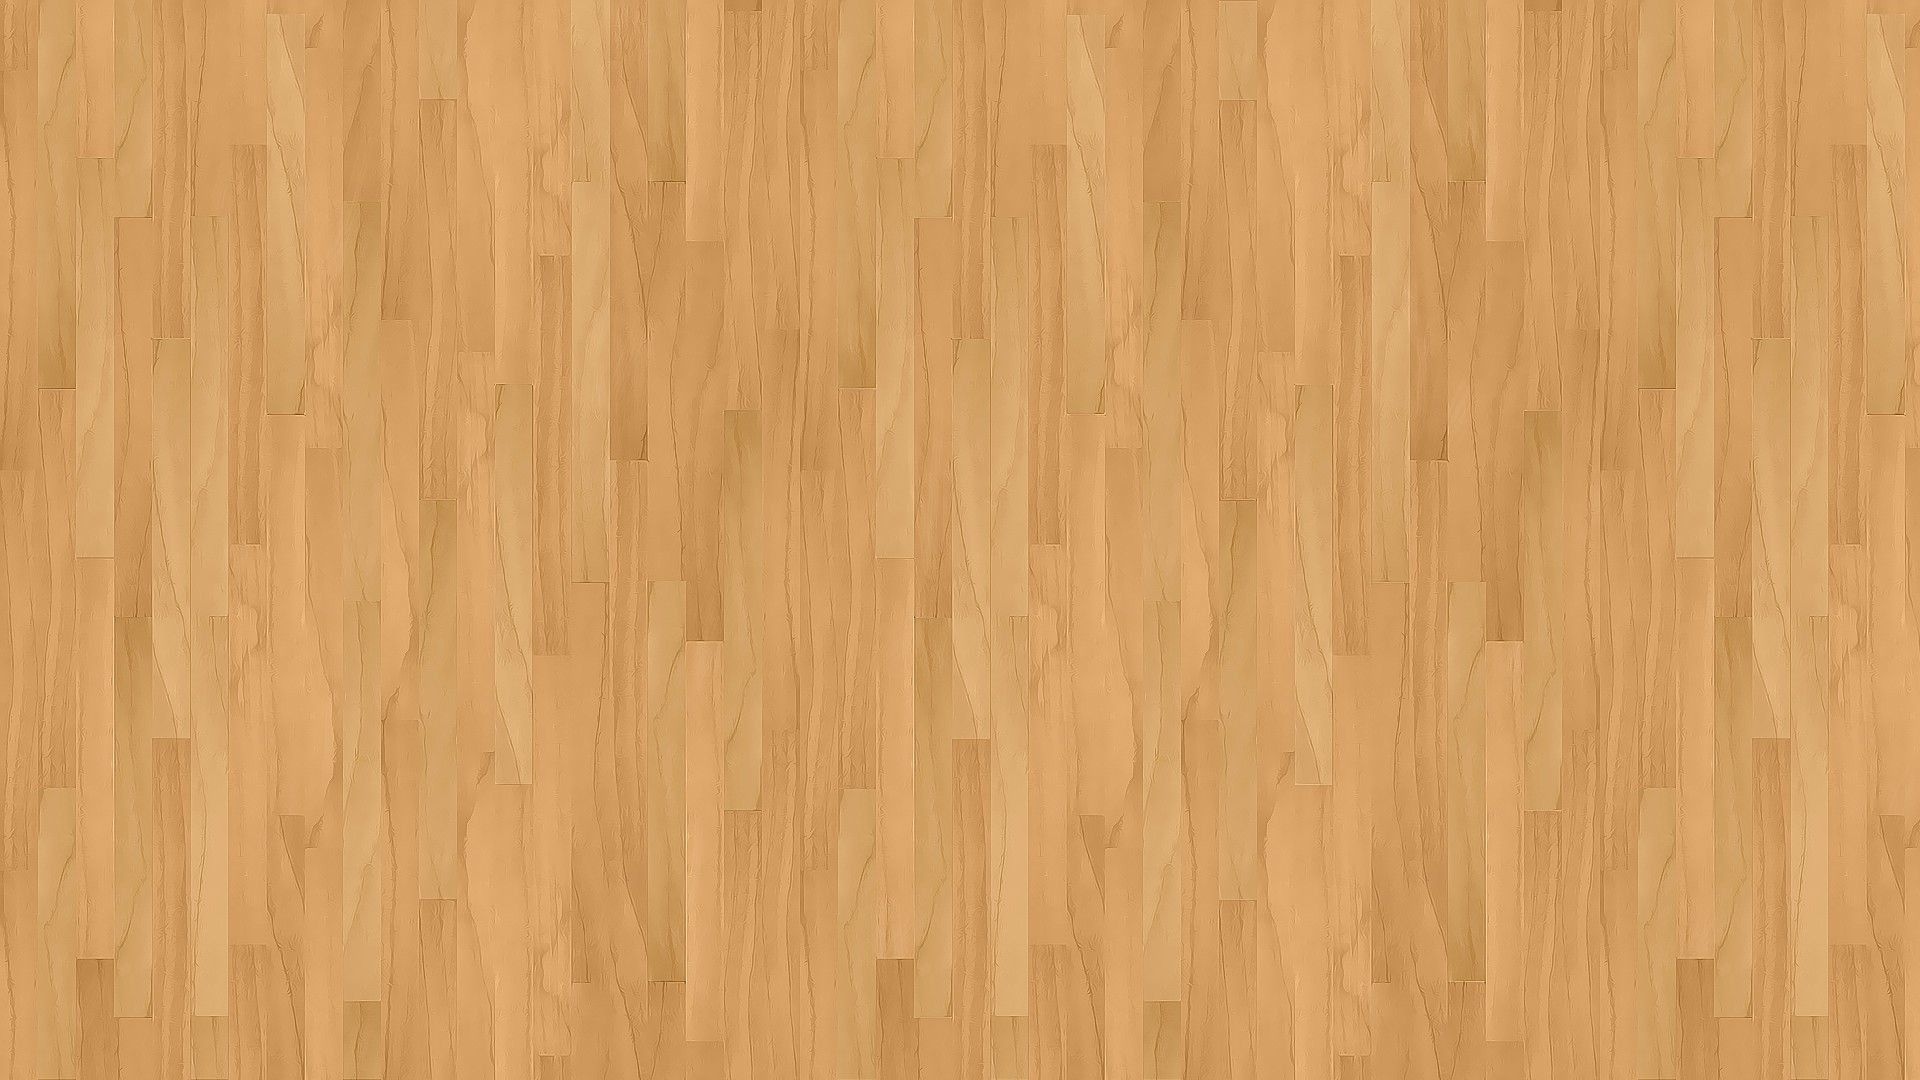 Wood floor wallpapers, Beautiful wood floors, Exquisite flooring designs, Elegant wood backgrounds, 1920x1080 Full HD Desktop